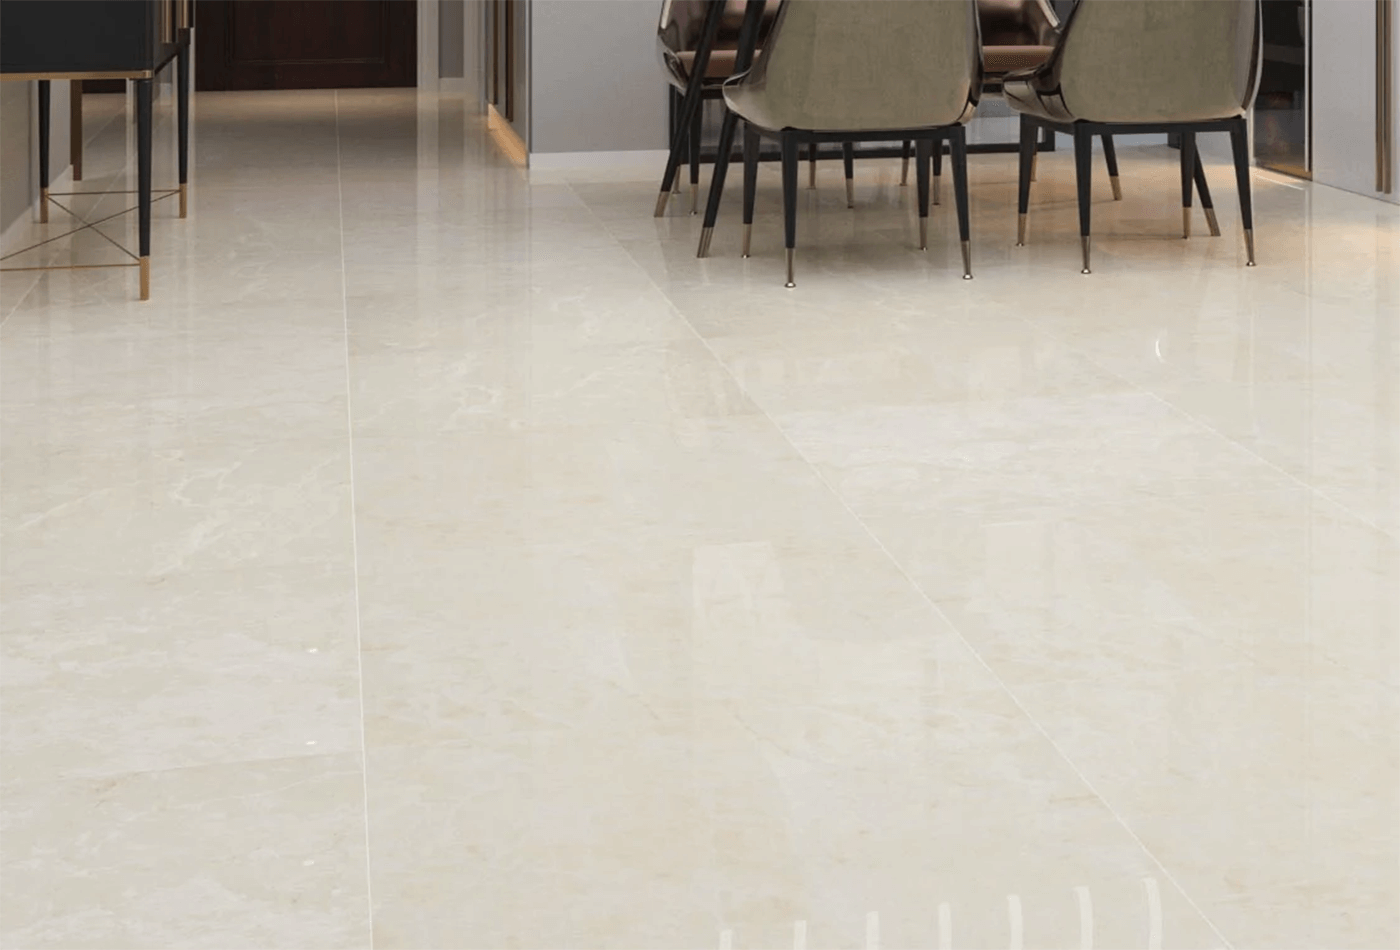 Premium Marble Tiles - The Name Speaks for Itself